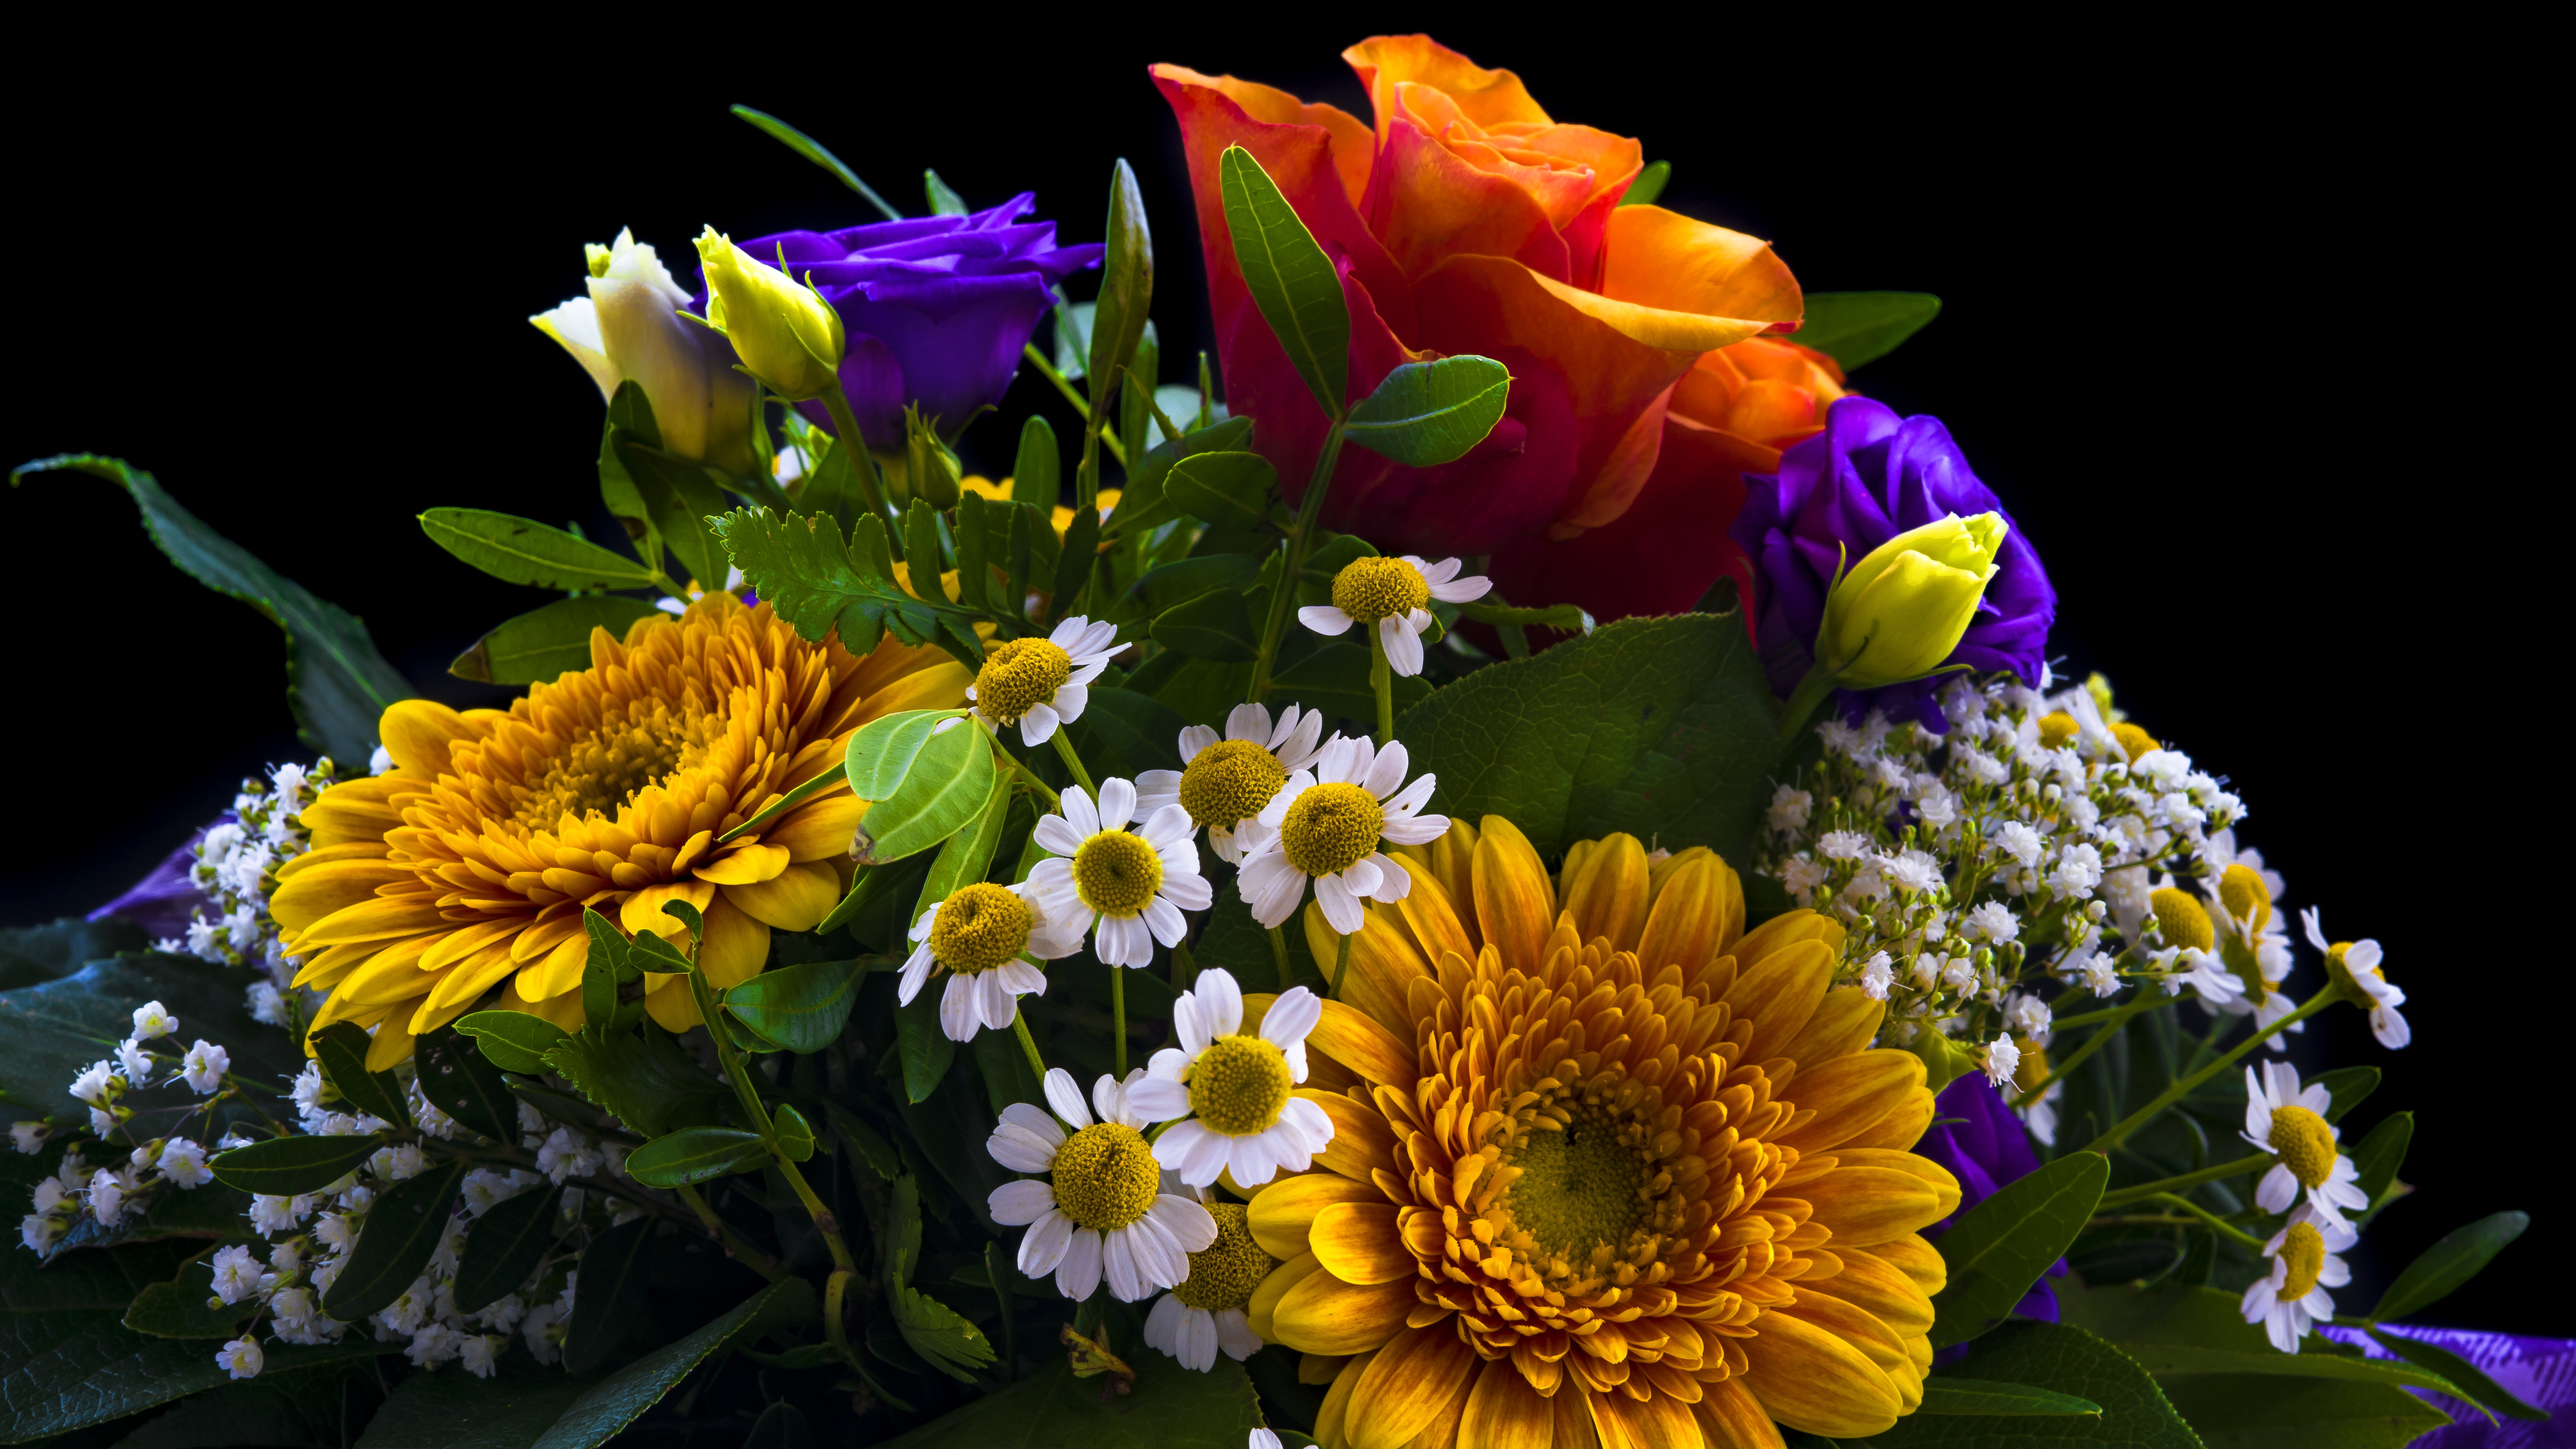 Wallpapers festive bouquet floral colorful on the desktop